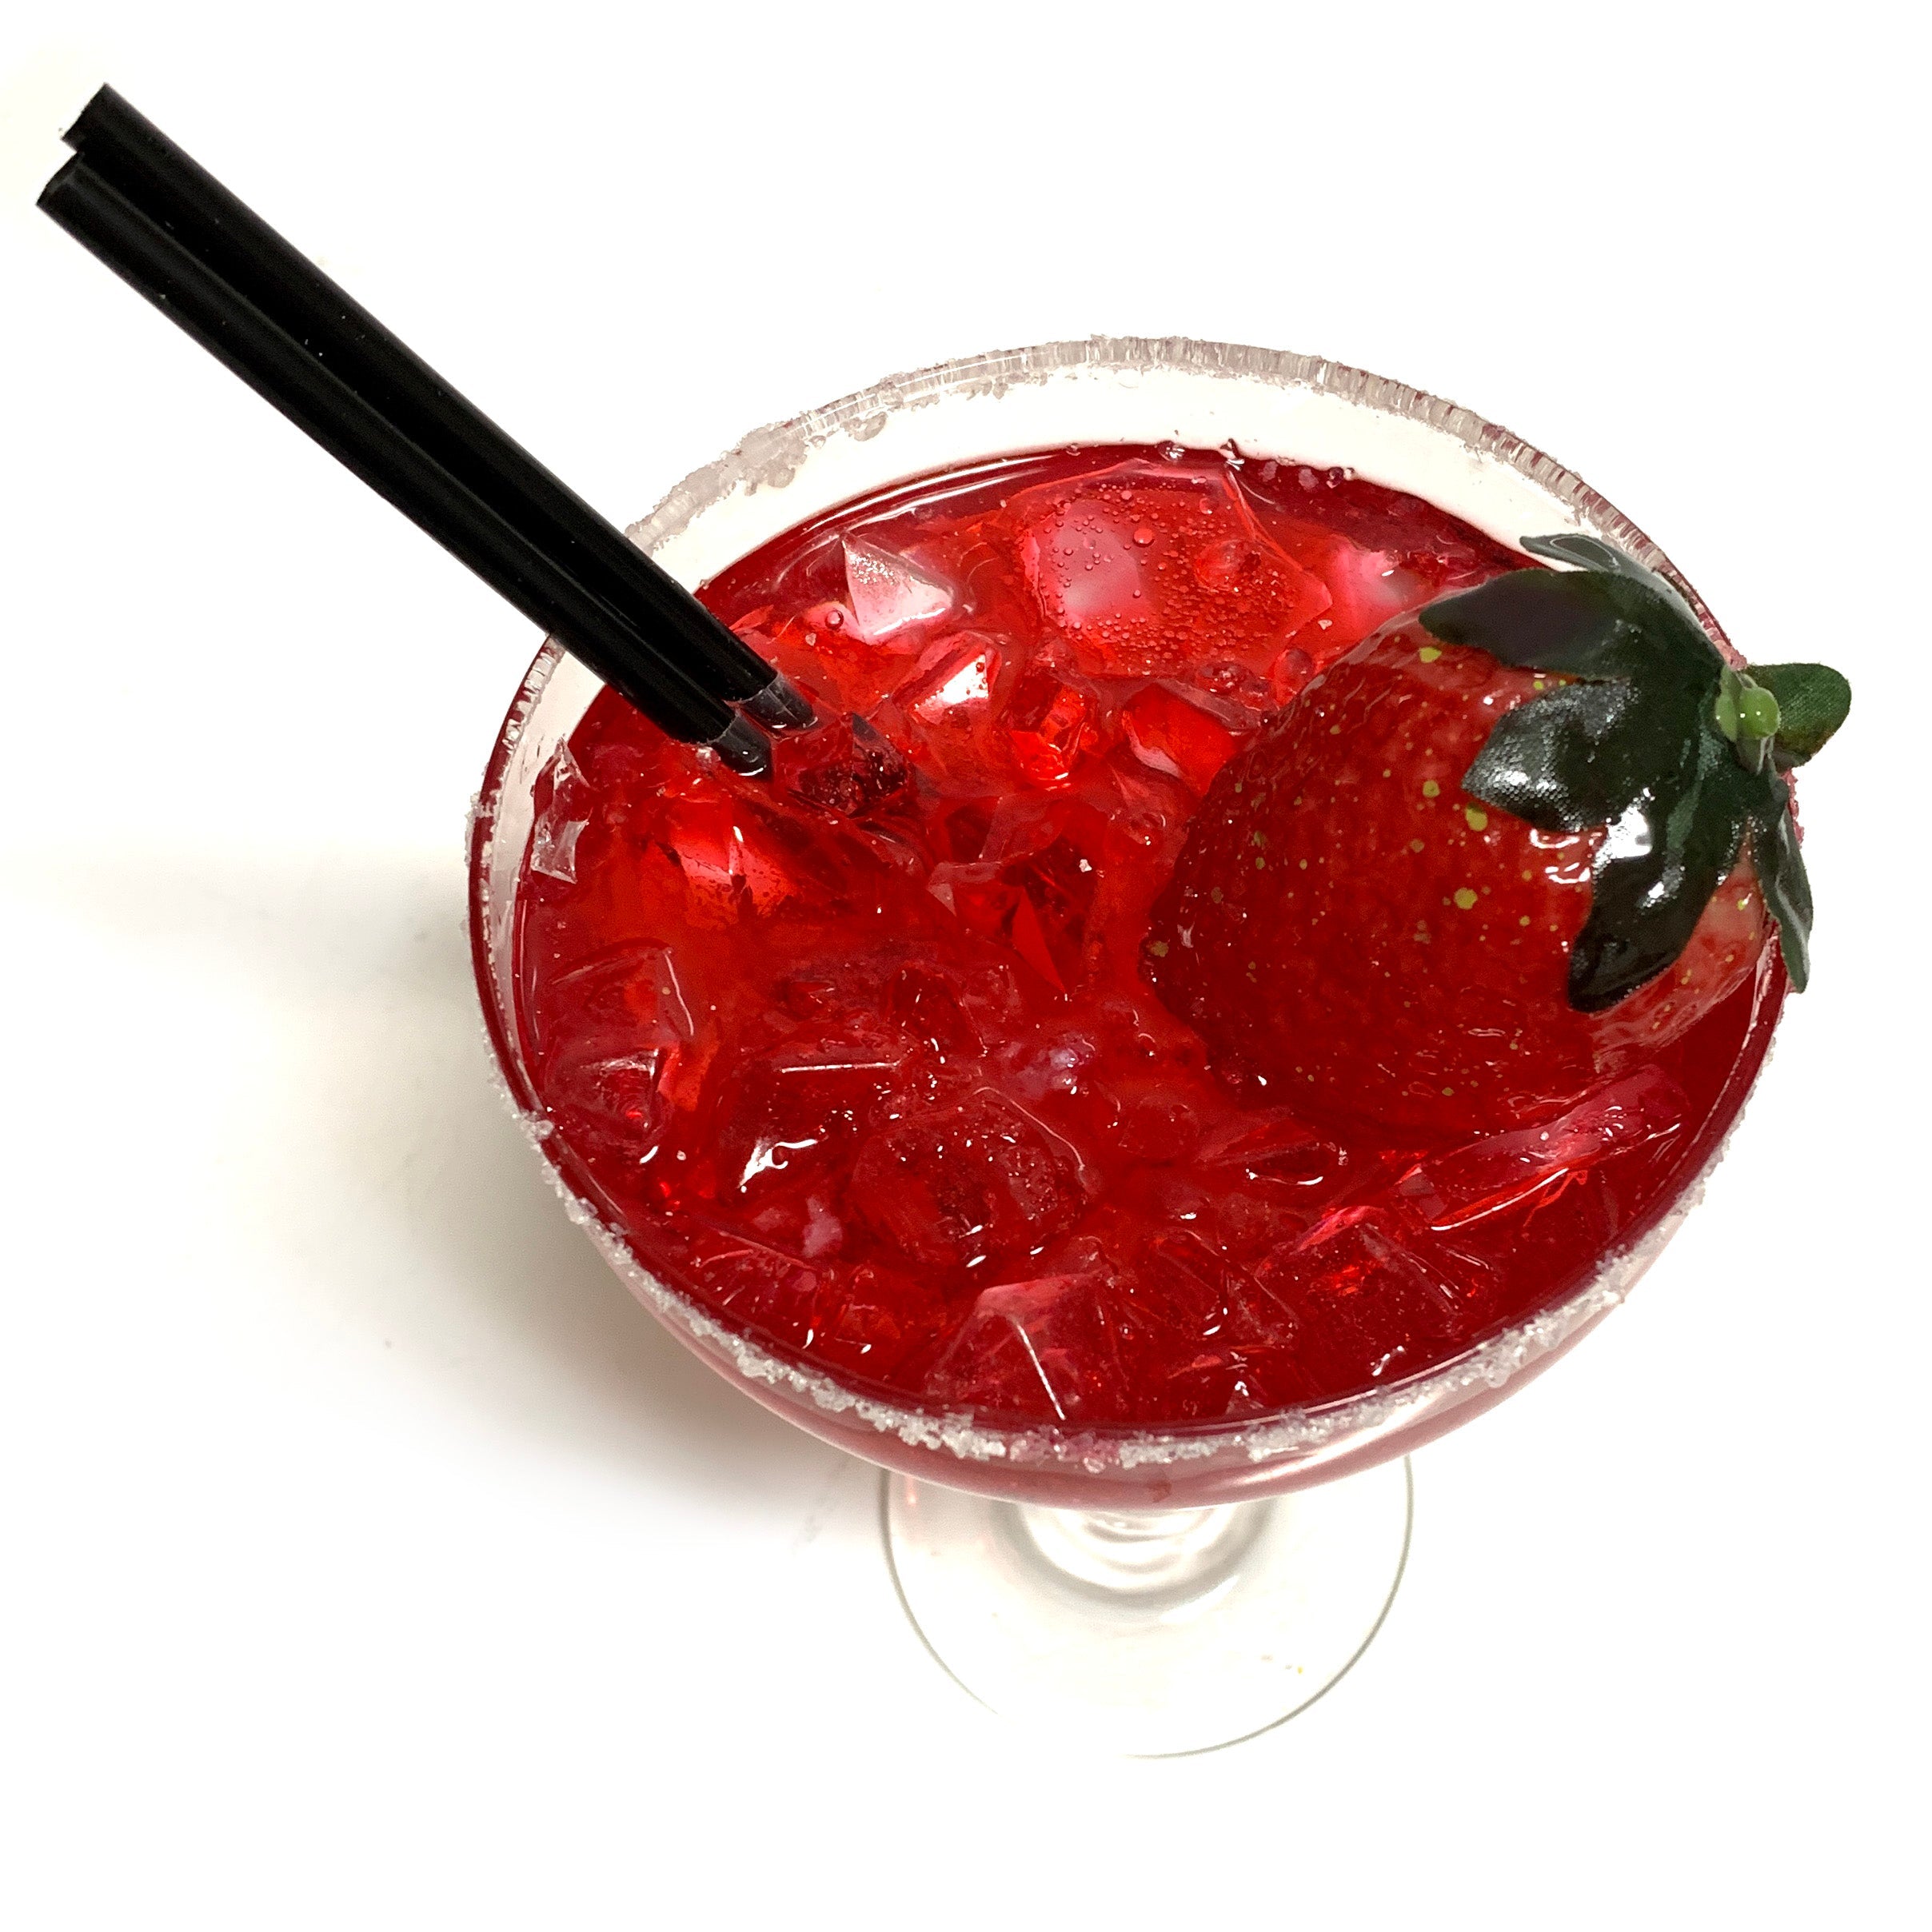 FX Display Replica Strawberry Daiquiri Drink in Glass Prop